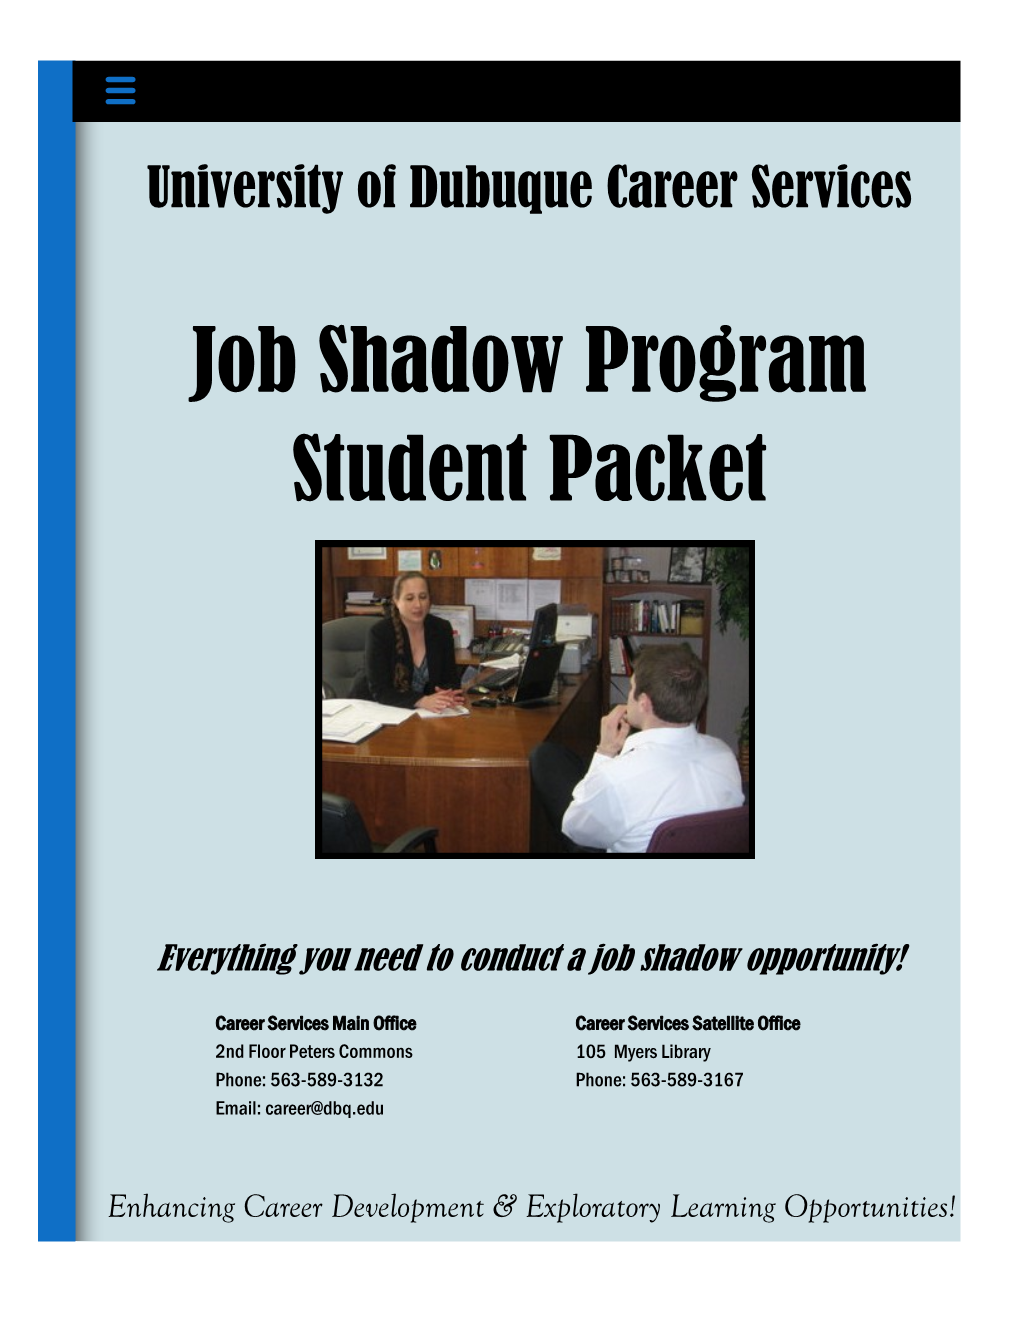 Job Shadow Program Student Packet